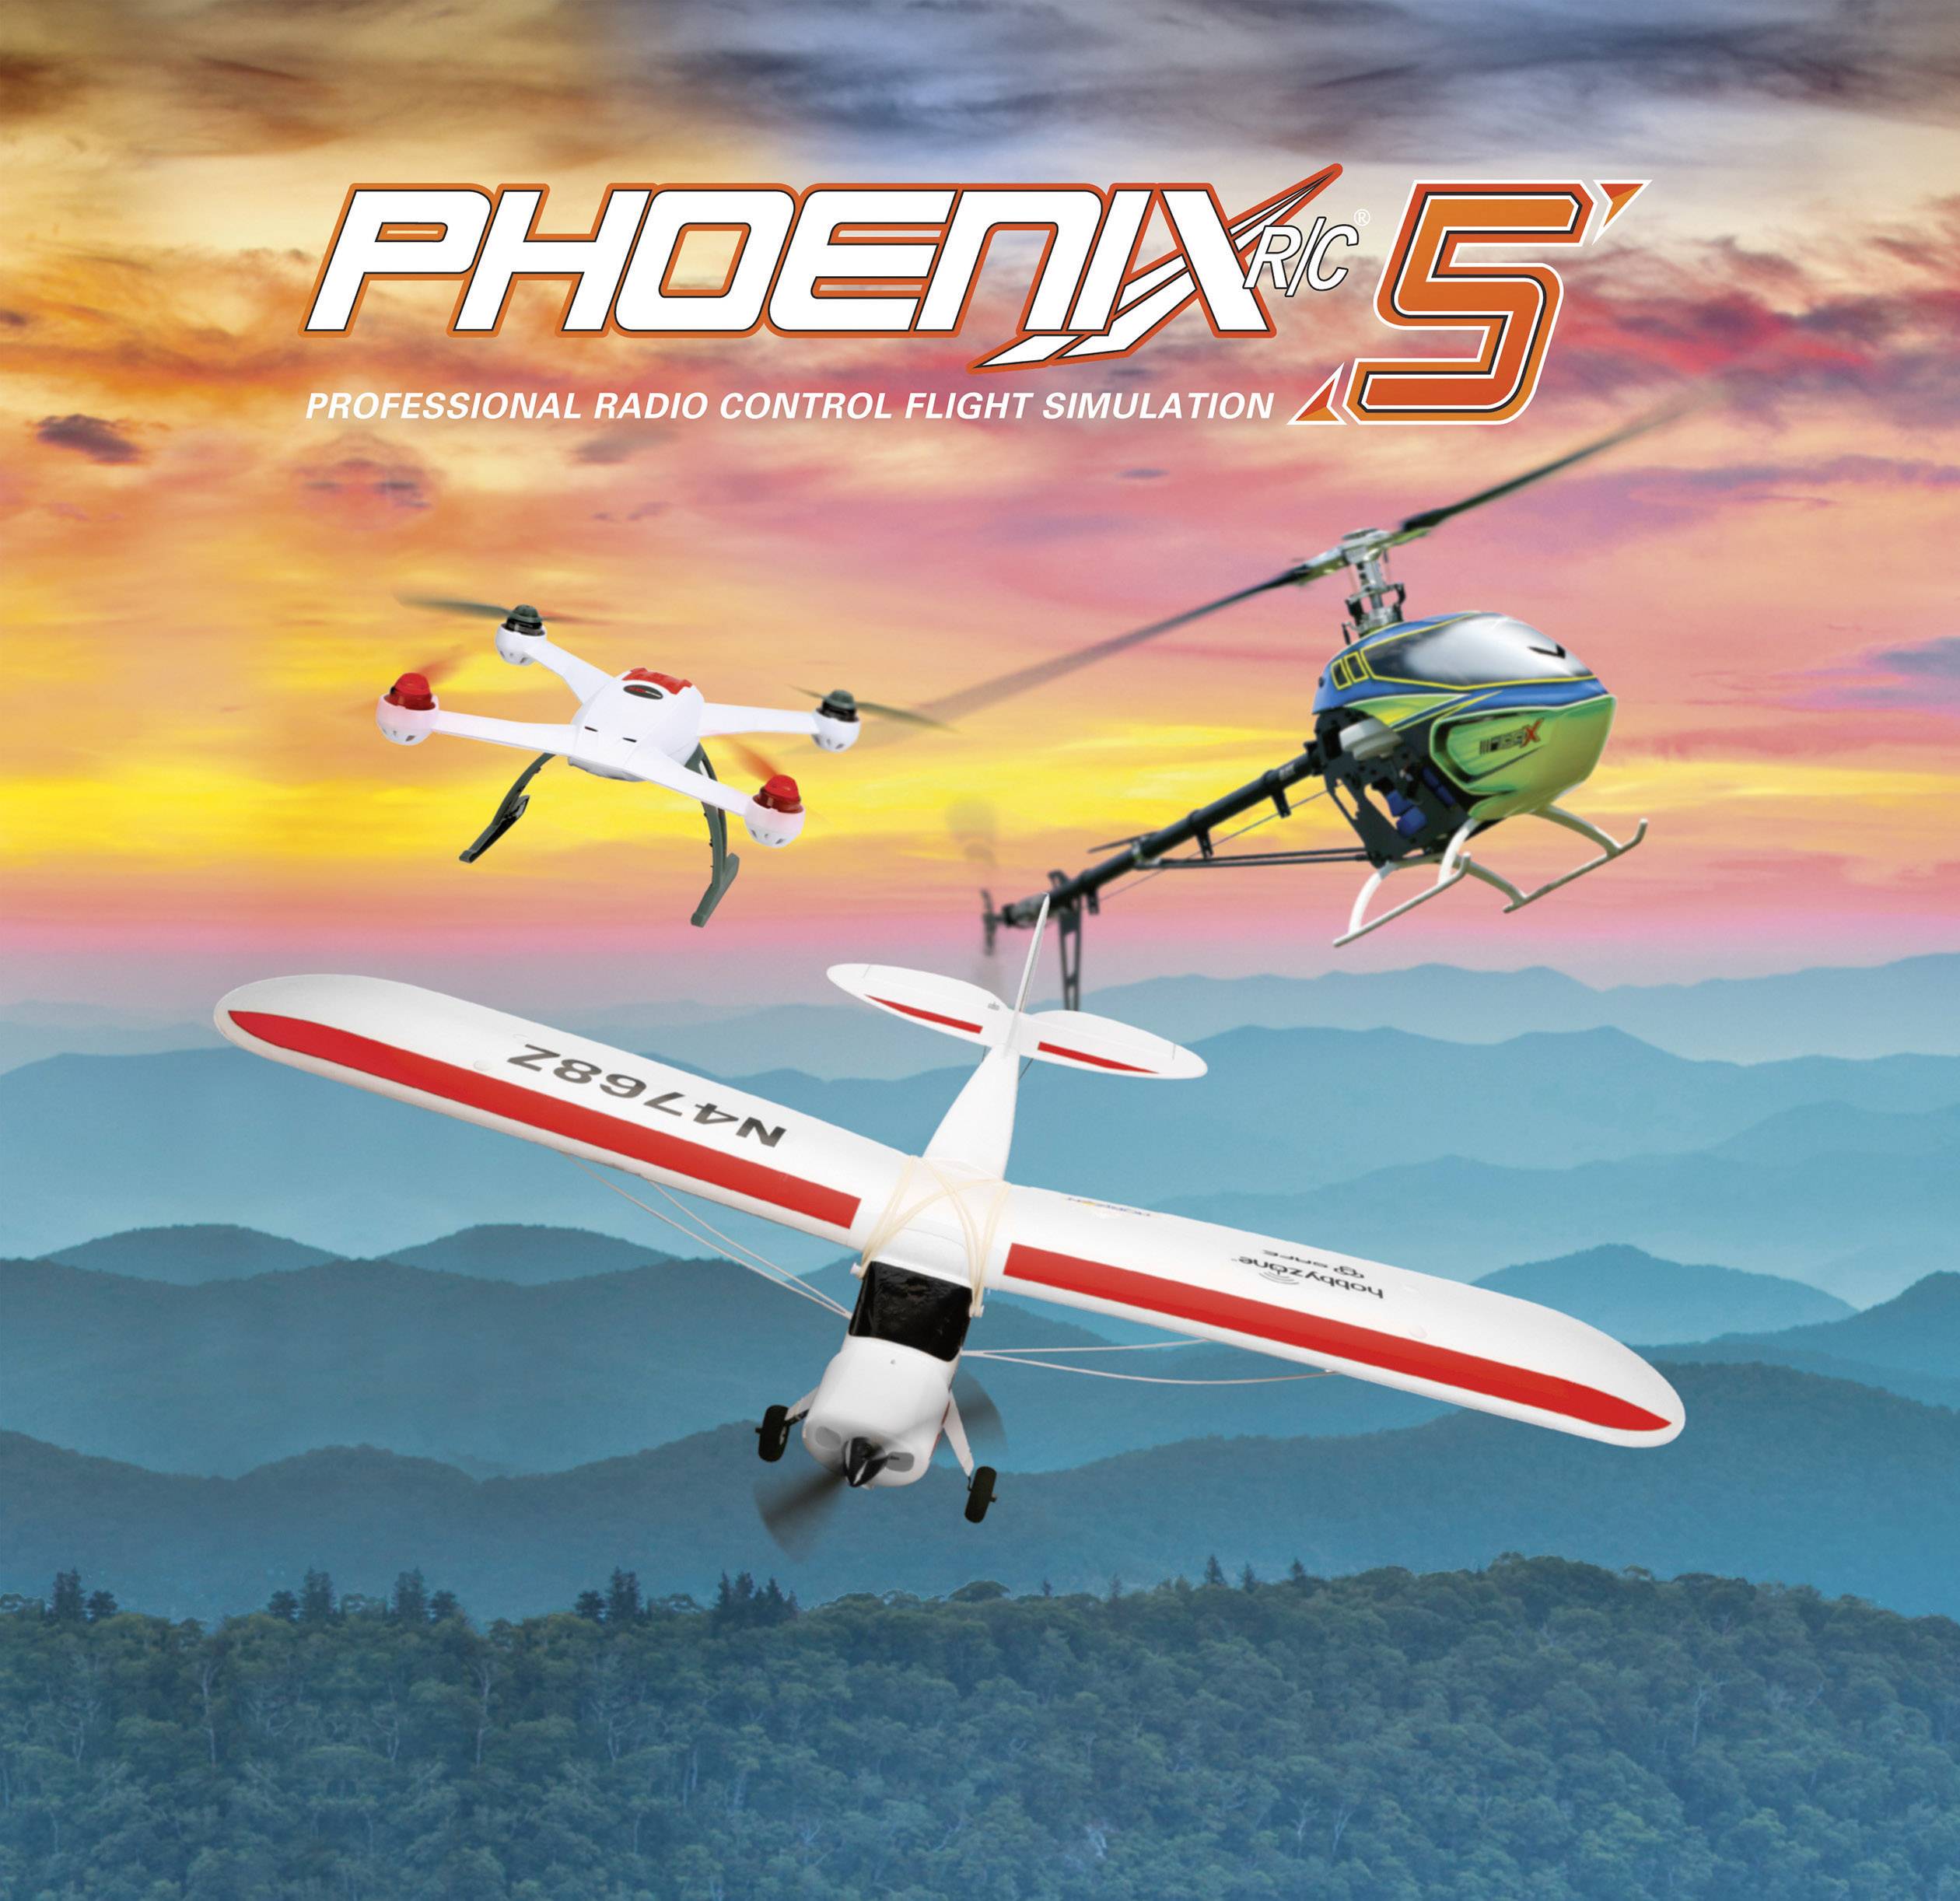 phoenix rc flight simulator 5.0 update